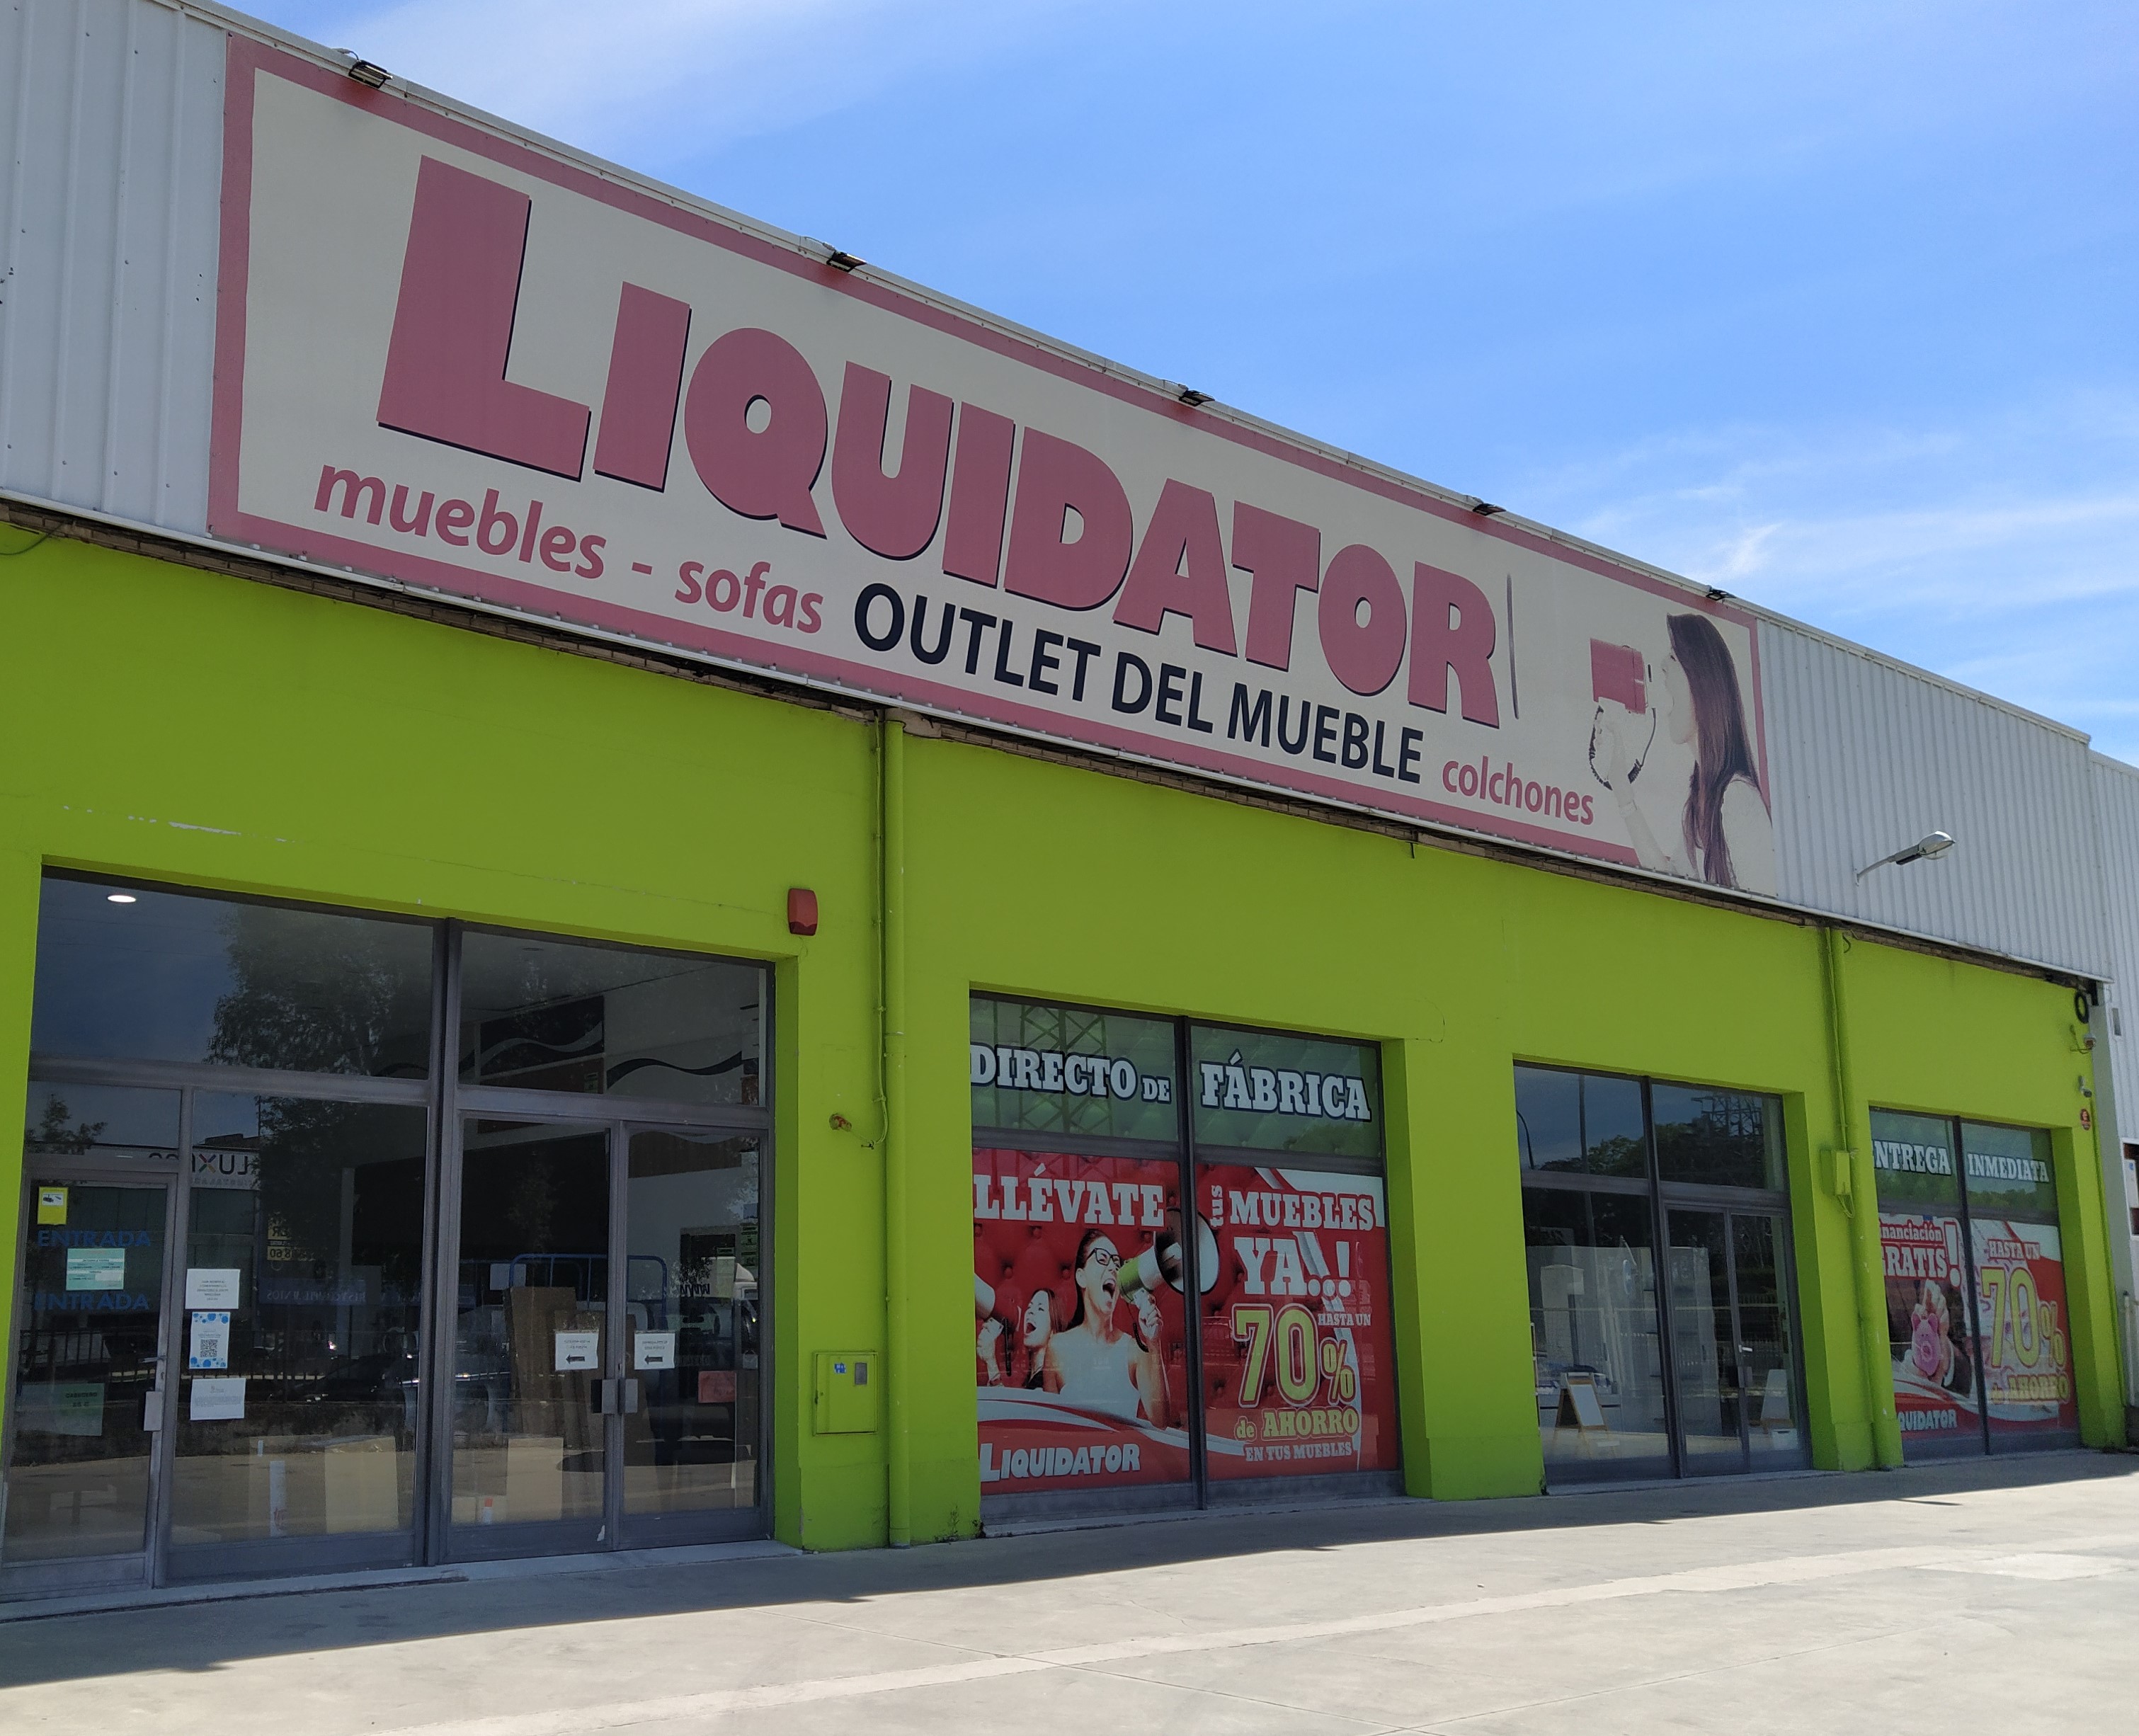 Liquidator Outlet Del Mueble